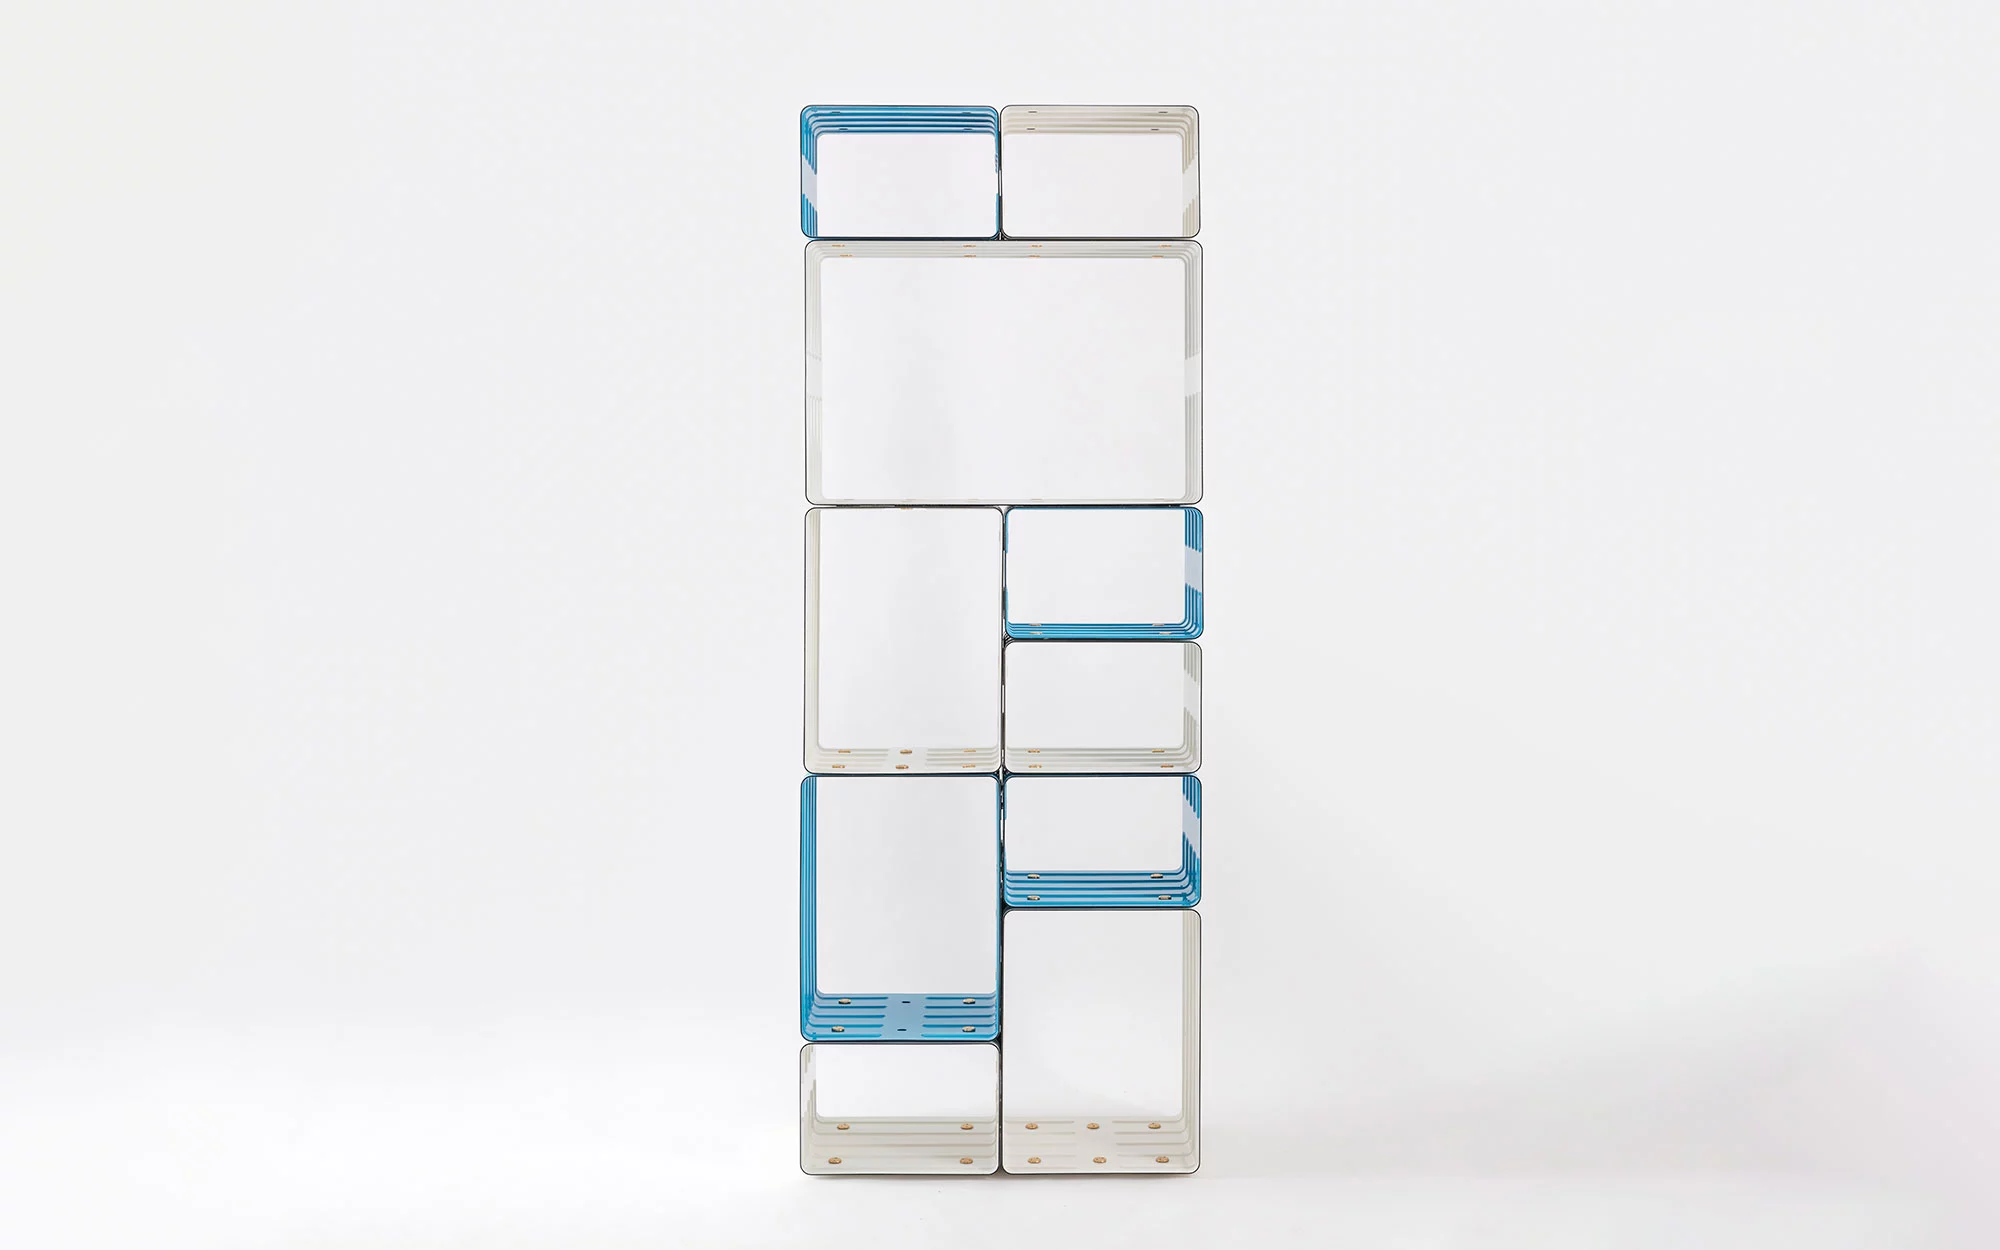 Quobus 1,3,6 two-colored - Marc Newson - Bookshelf - Galerie kreo